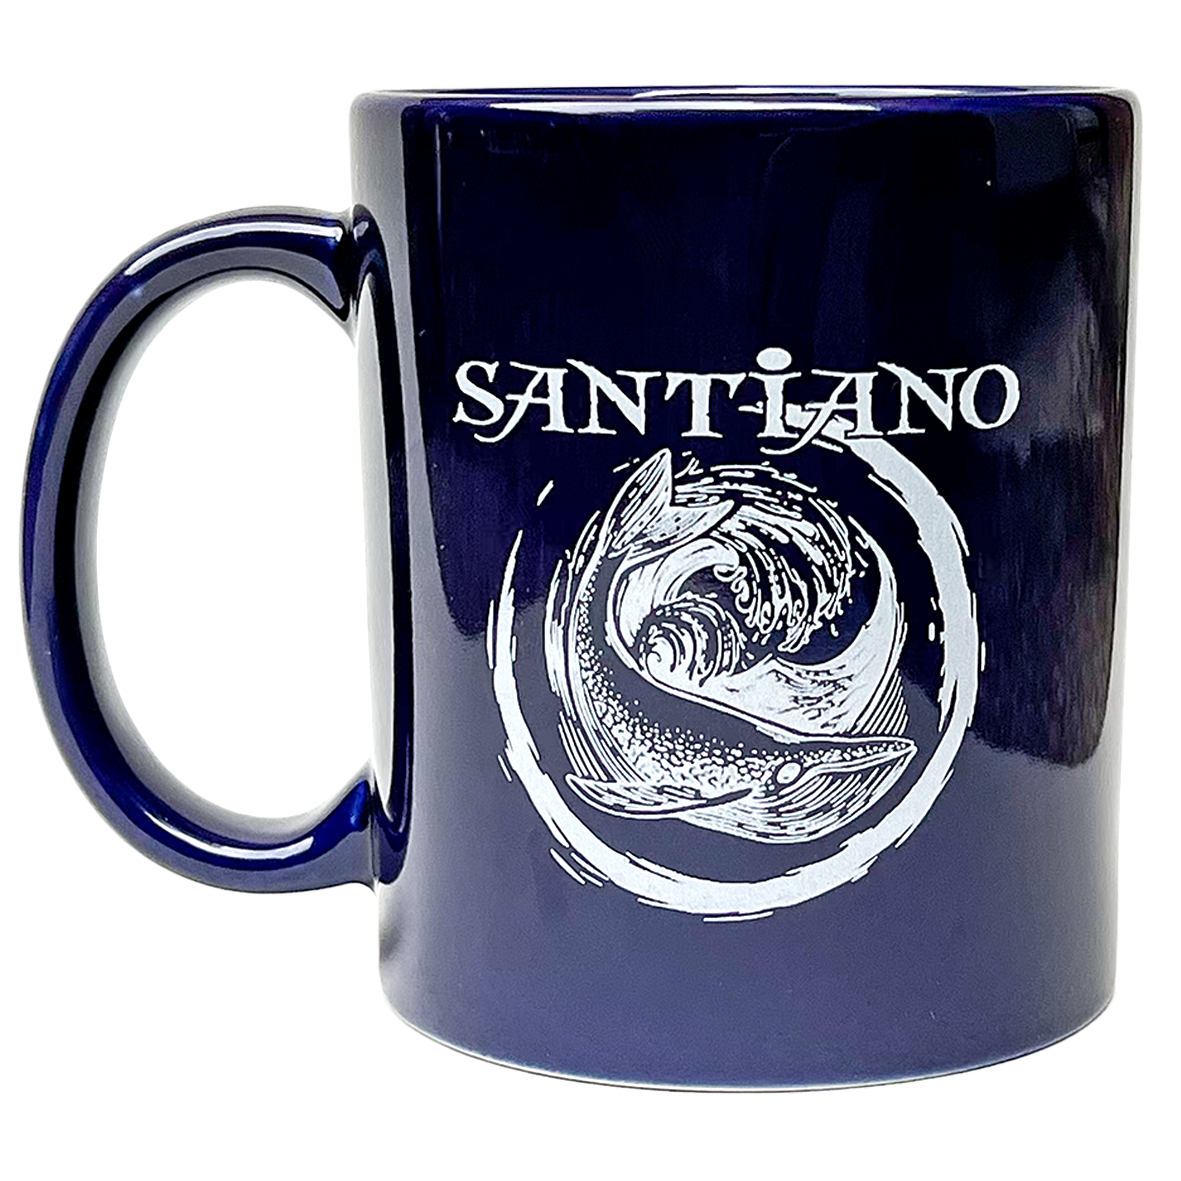 Santiano Coffee Mug 'Unter Deck alle Mann...'